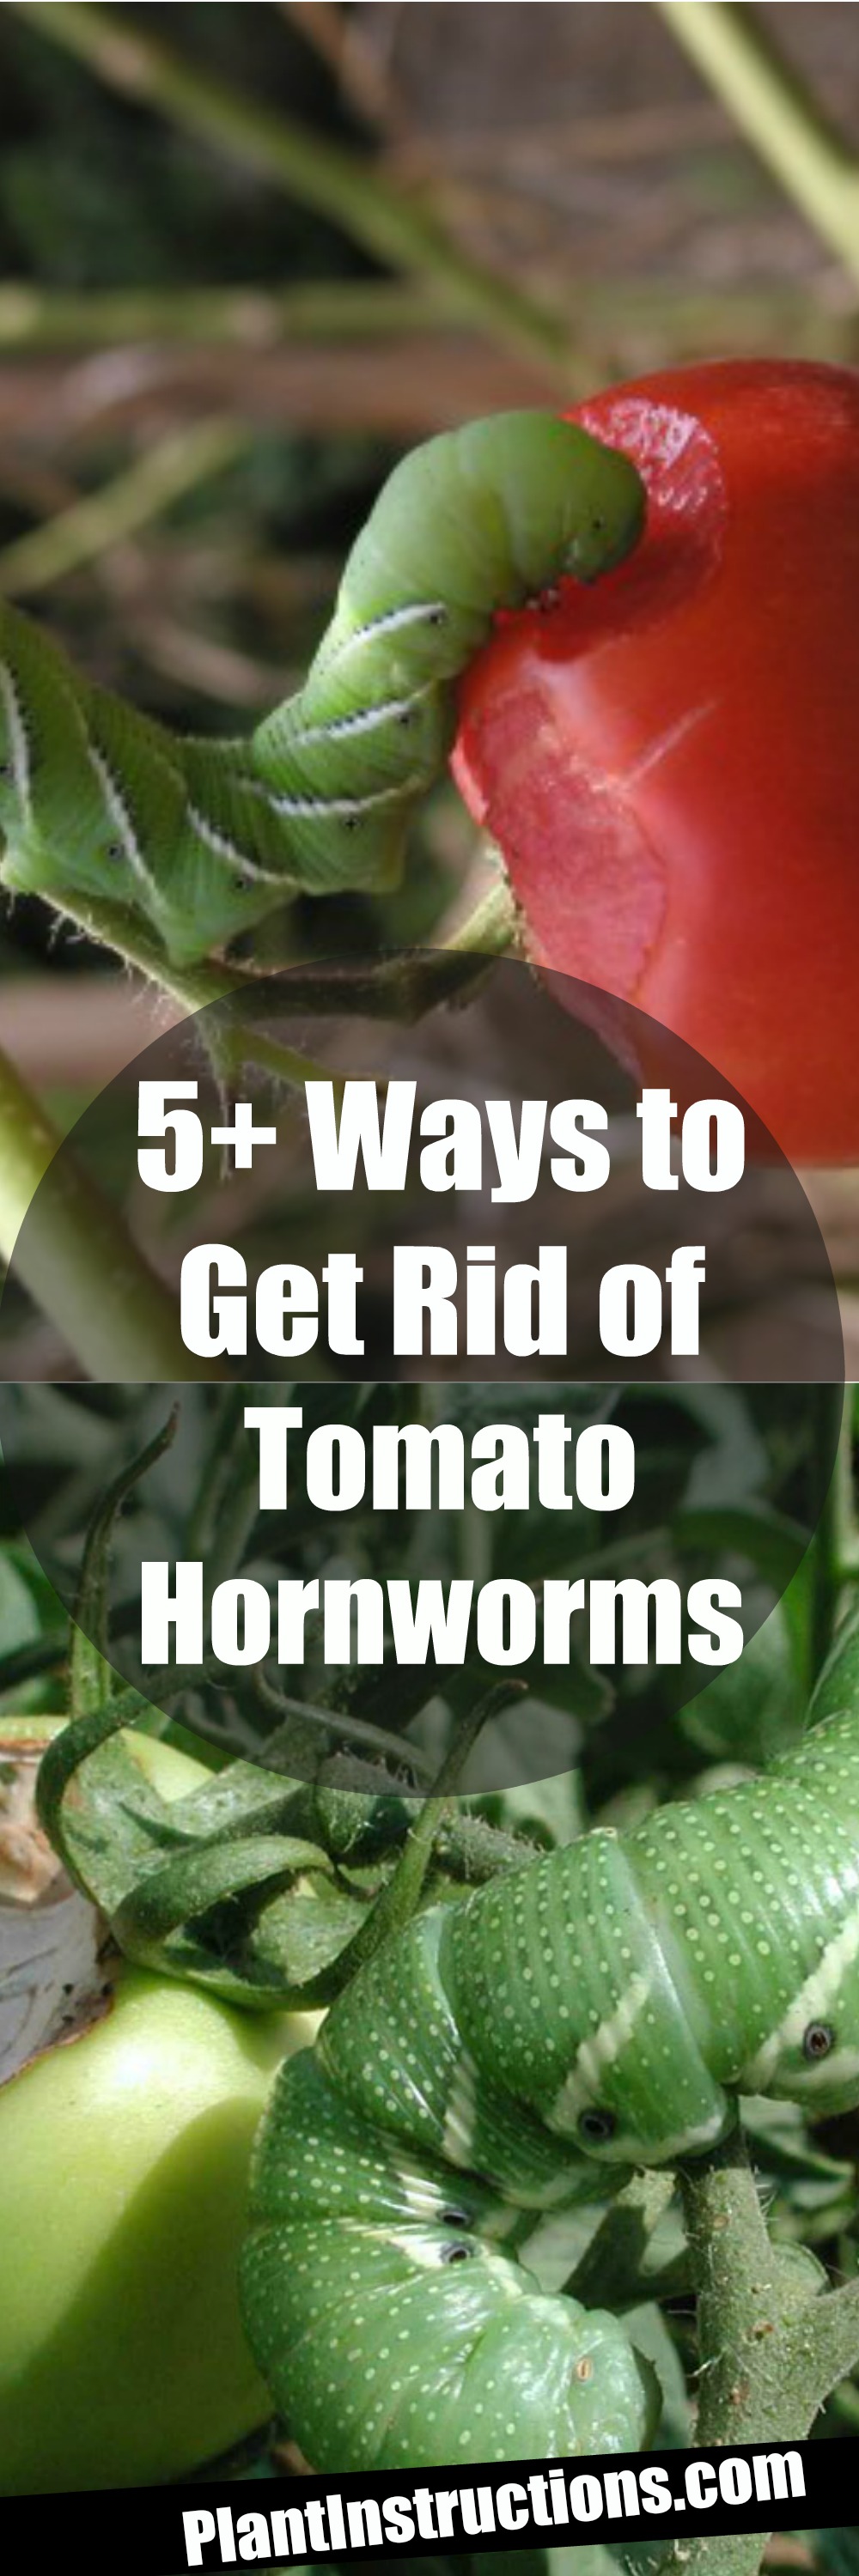 download tomato hornworm control